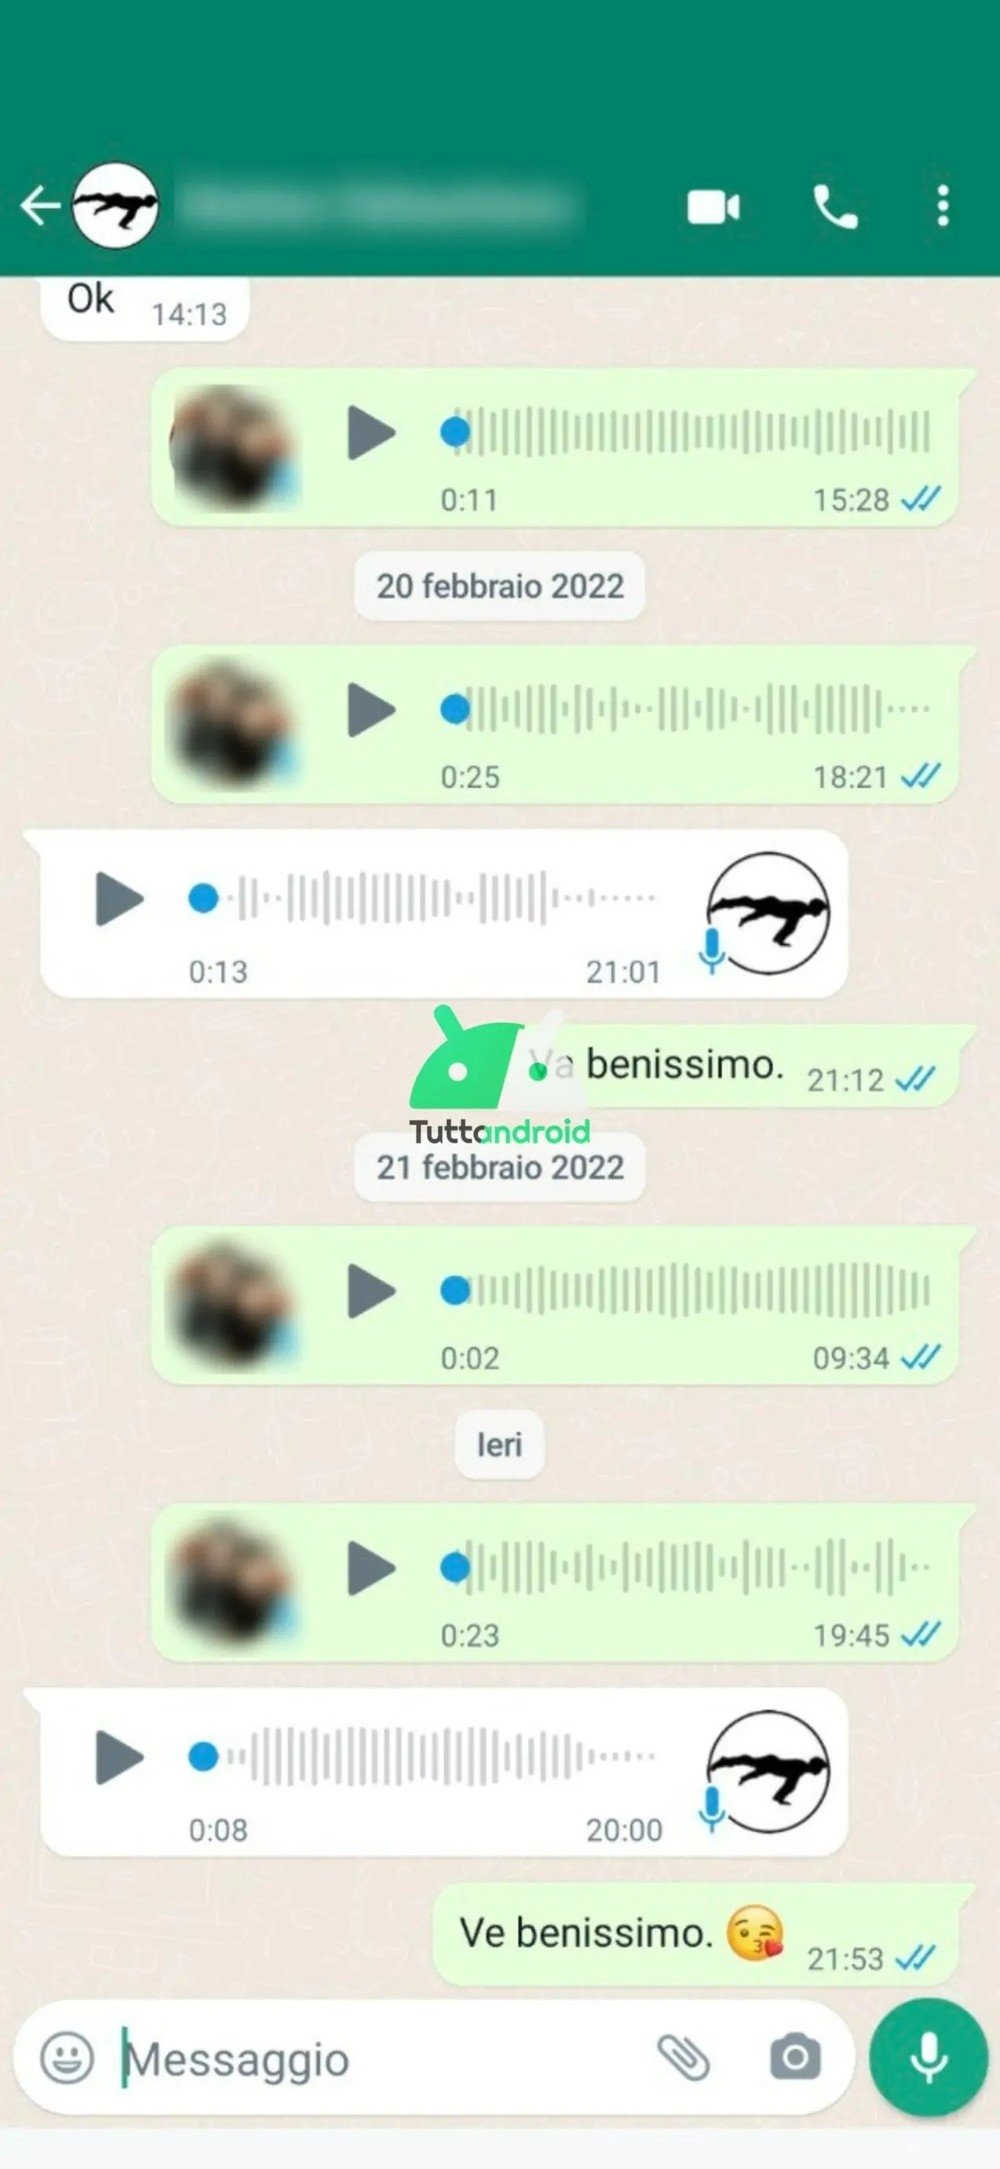 WhatsApp novo design conversa